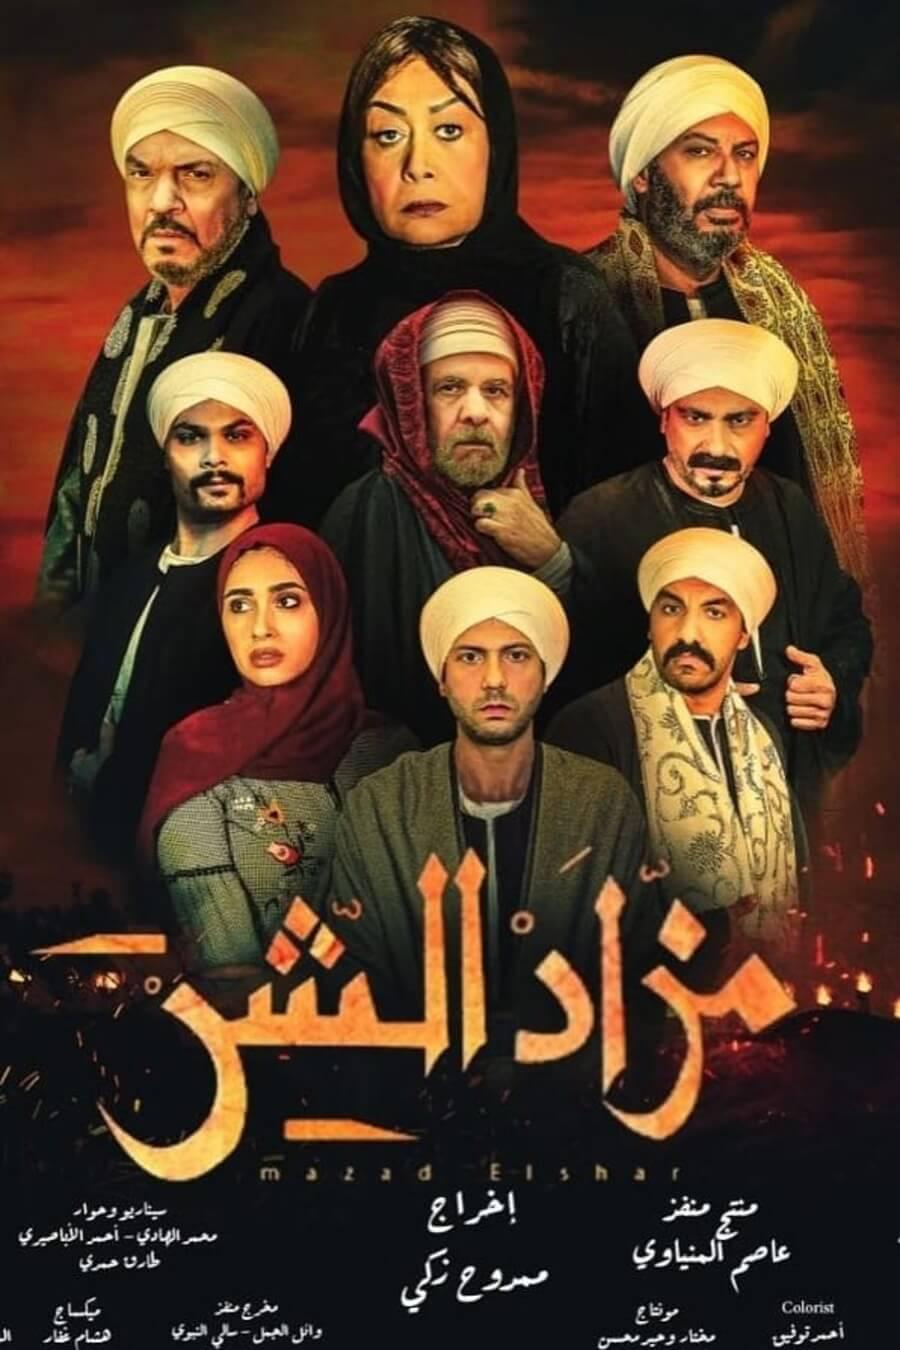 TV ratings for Mazad El Shar (مزاد الشر) in Turkey. TOD TV series